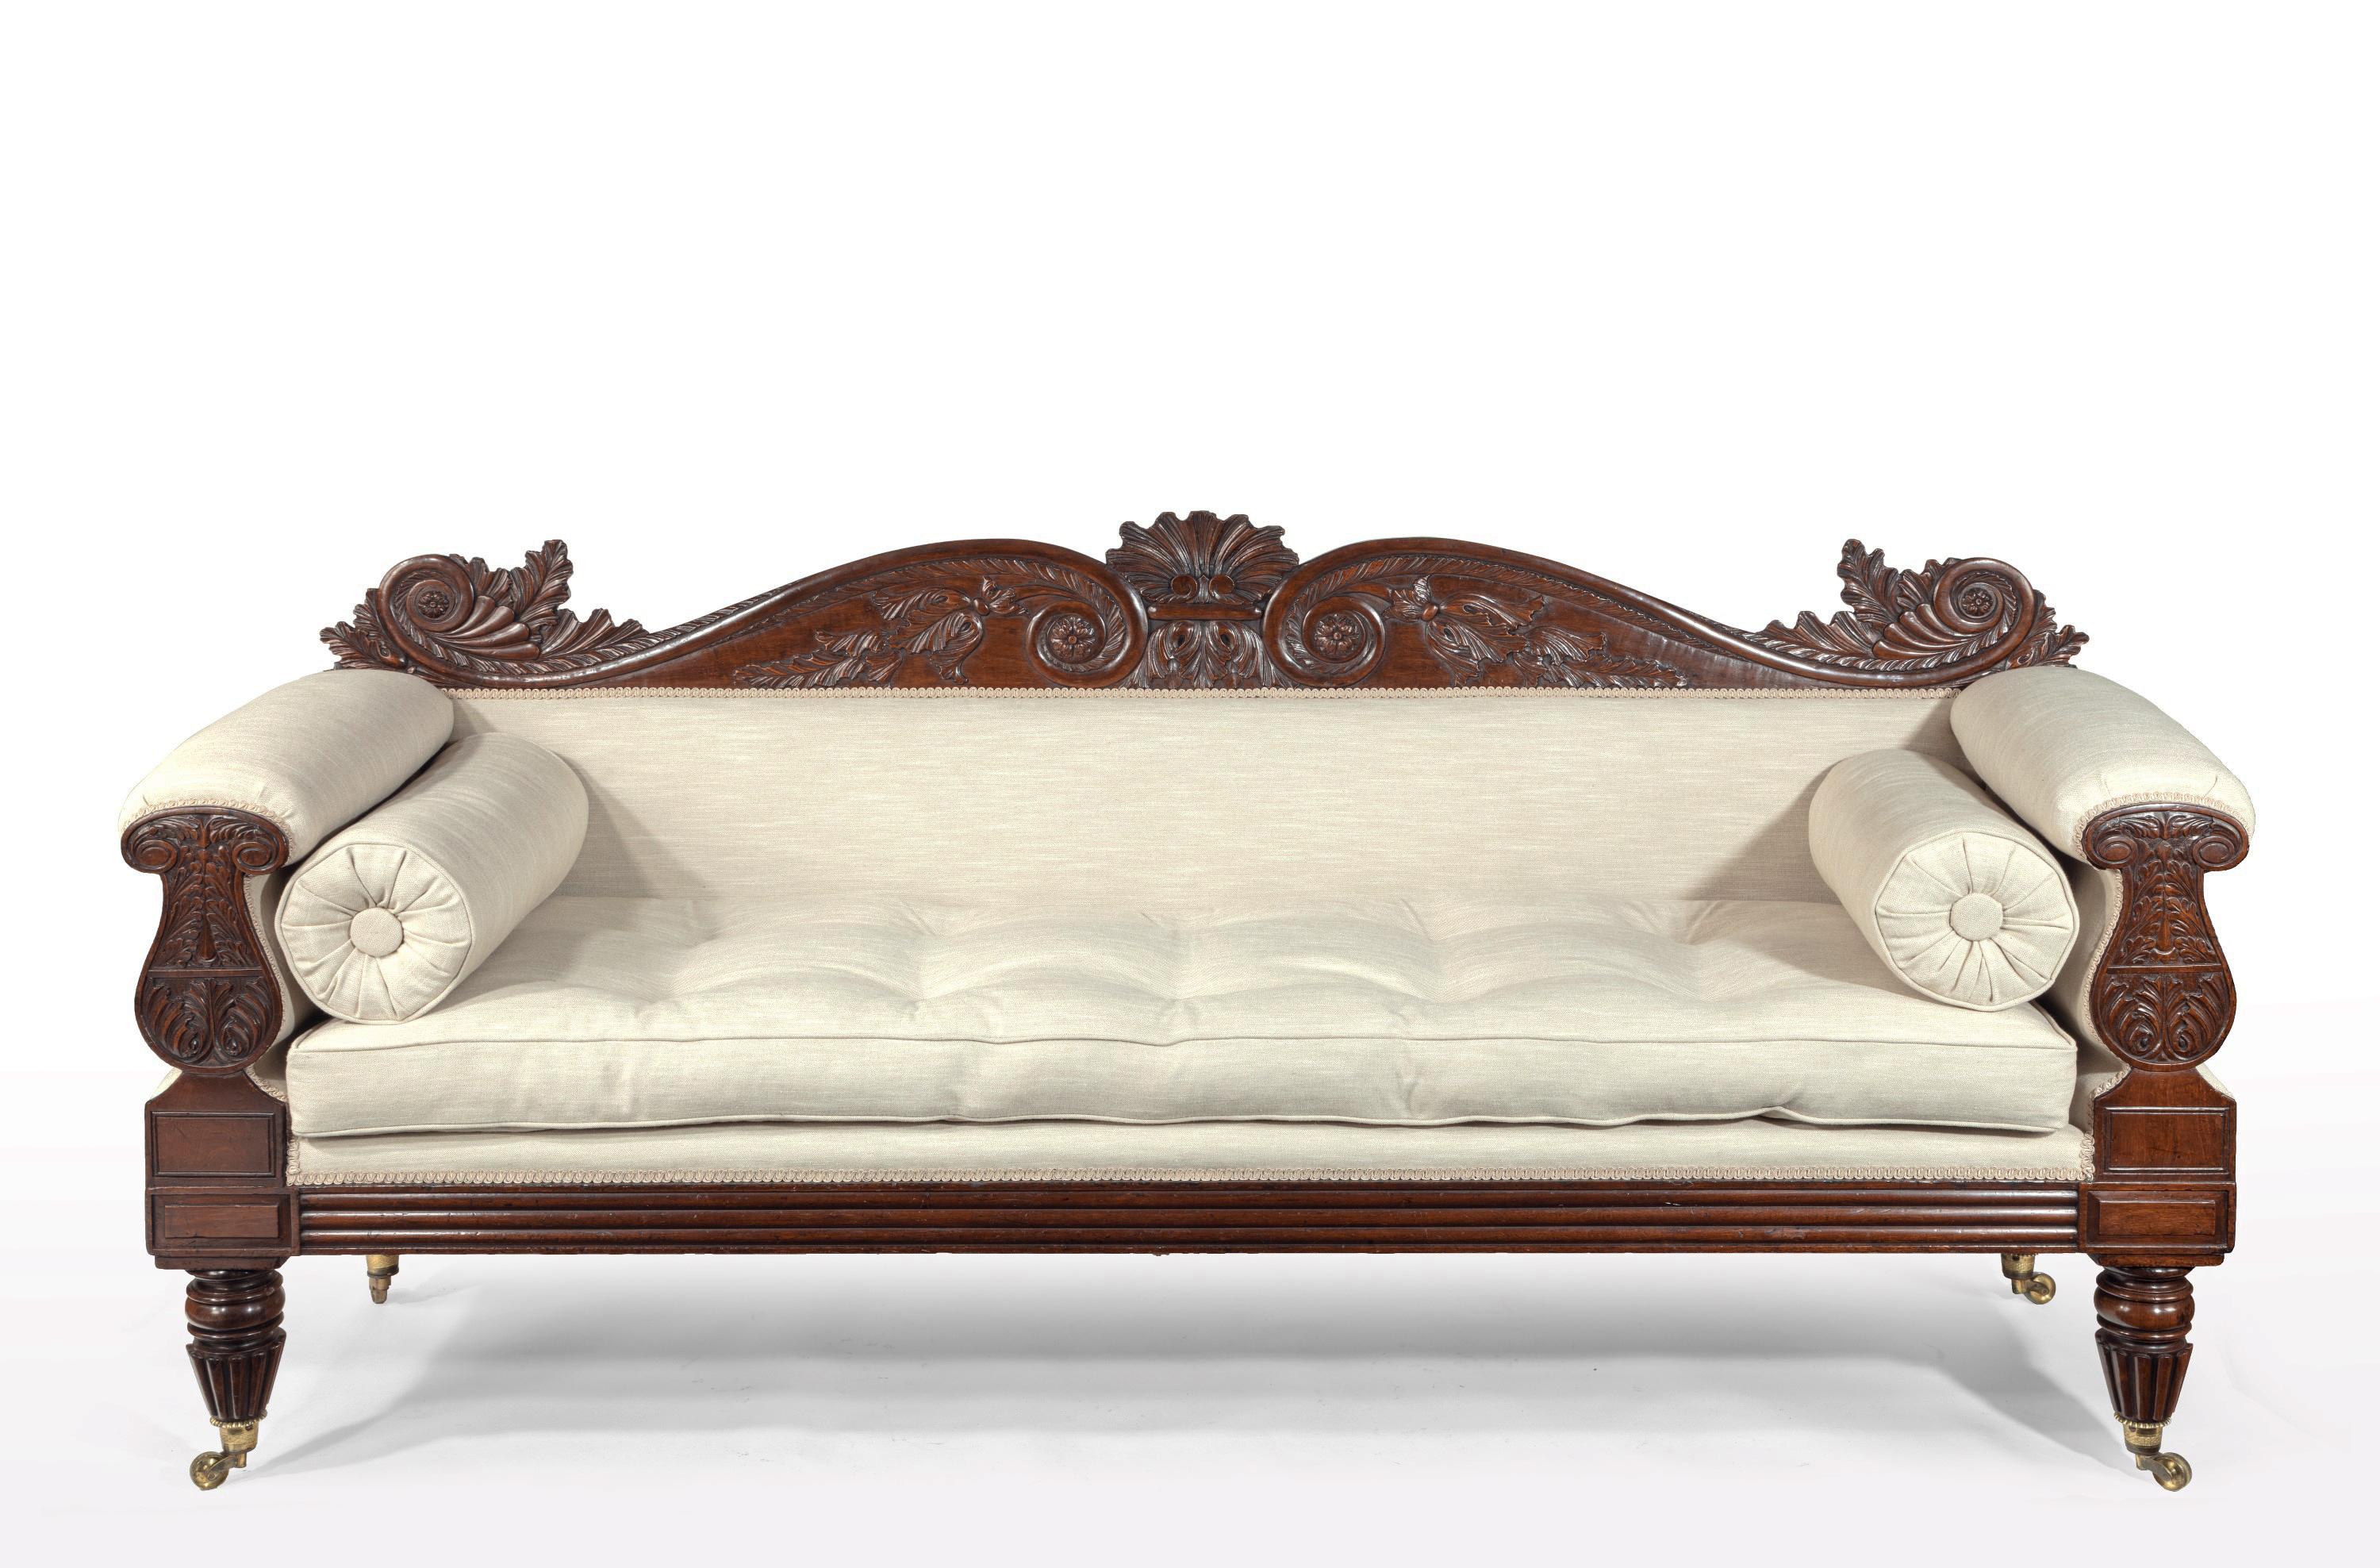 Fine Late Regency Sofa after a Design by John Taylor 1